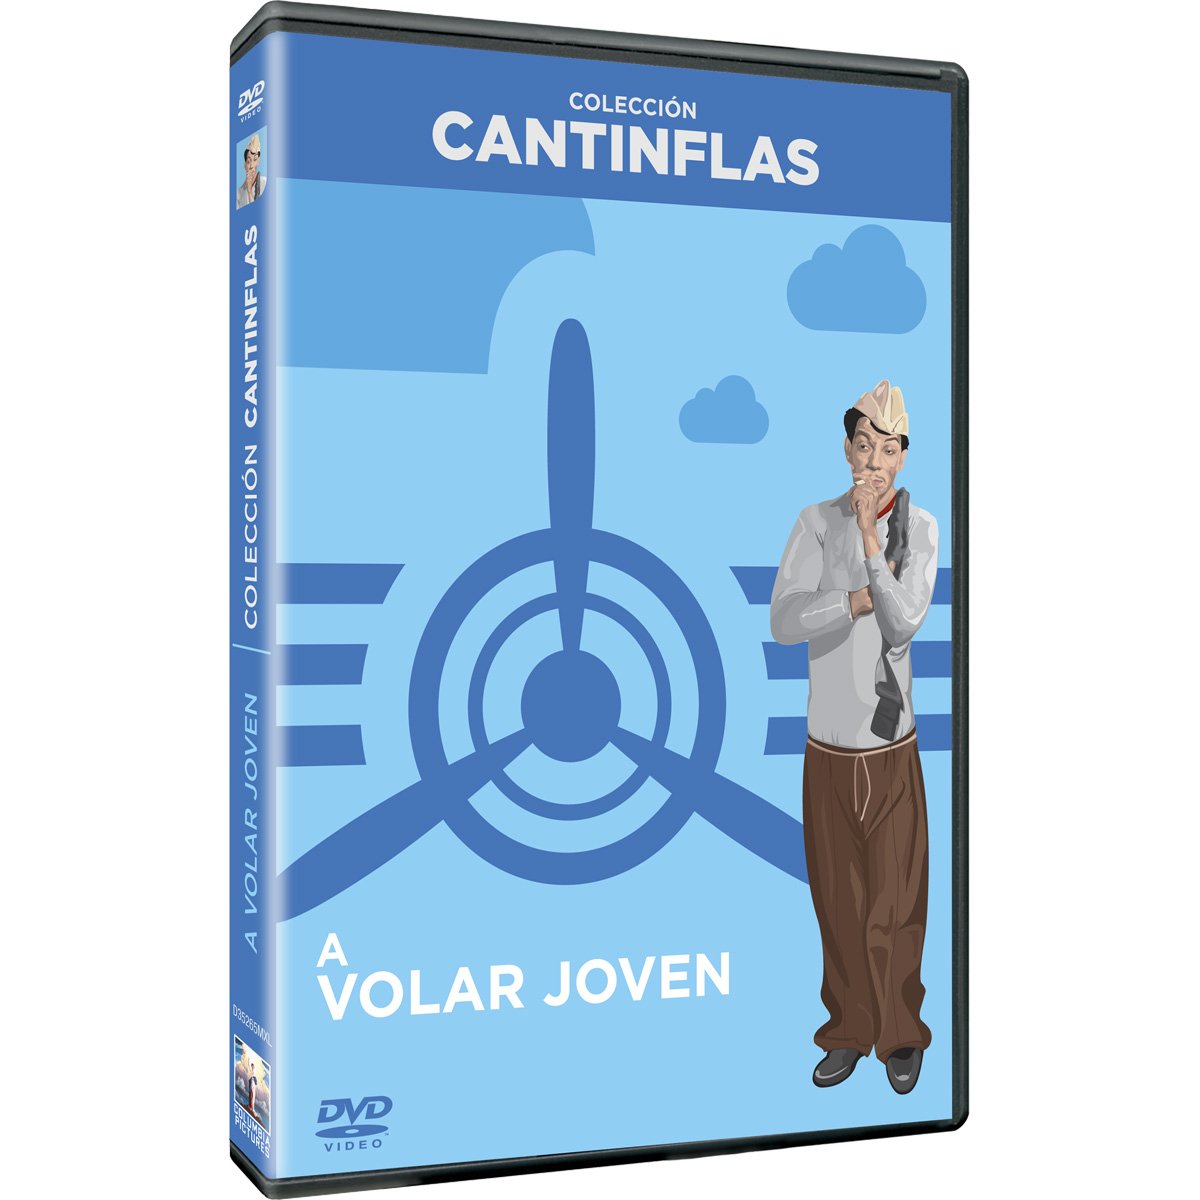 Dvd Coleccion Cantinflas a Volar Joven